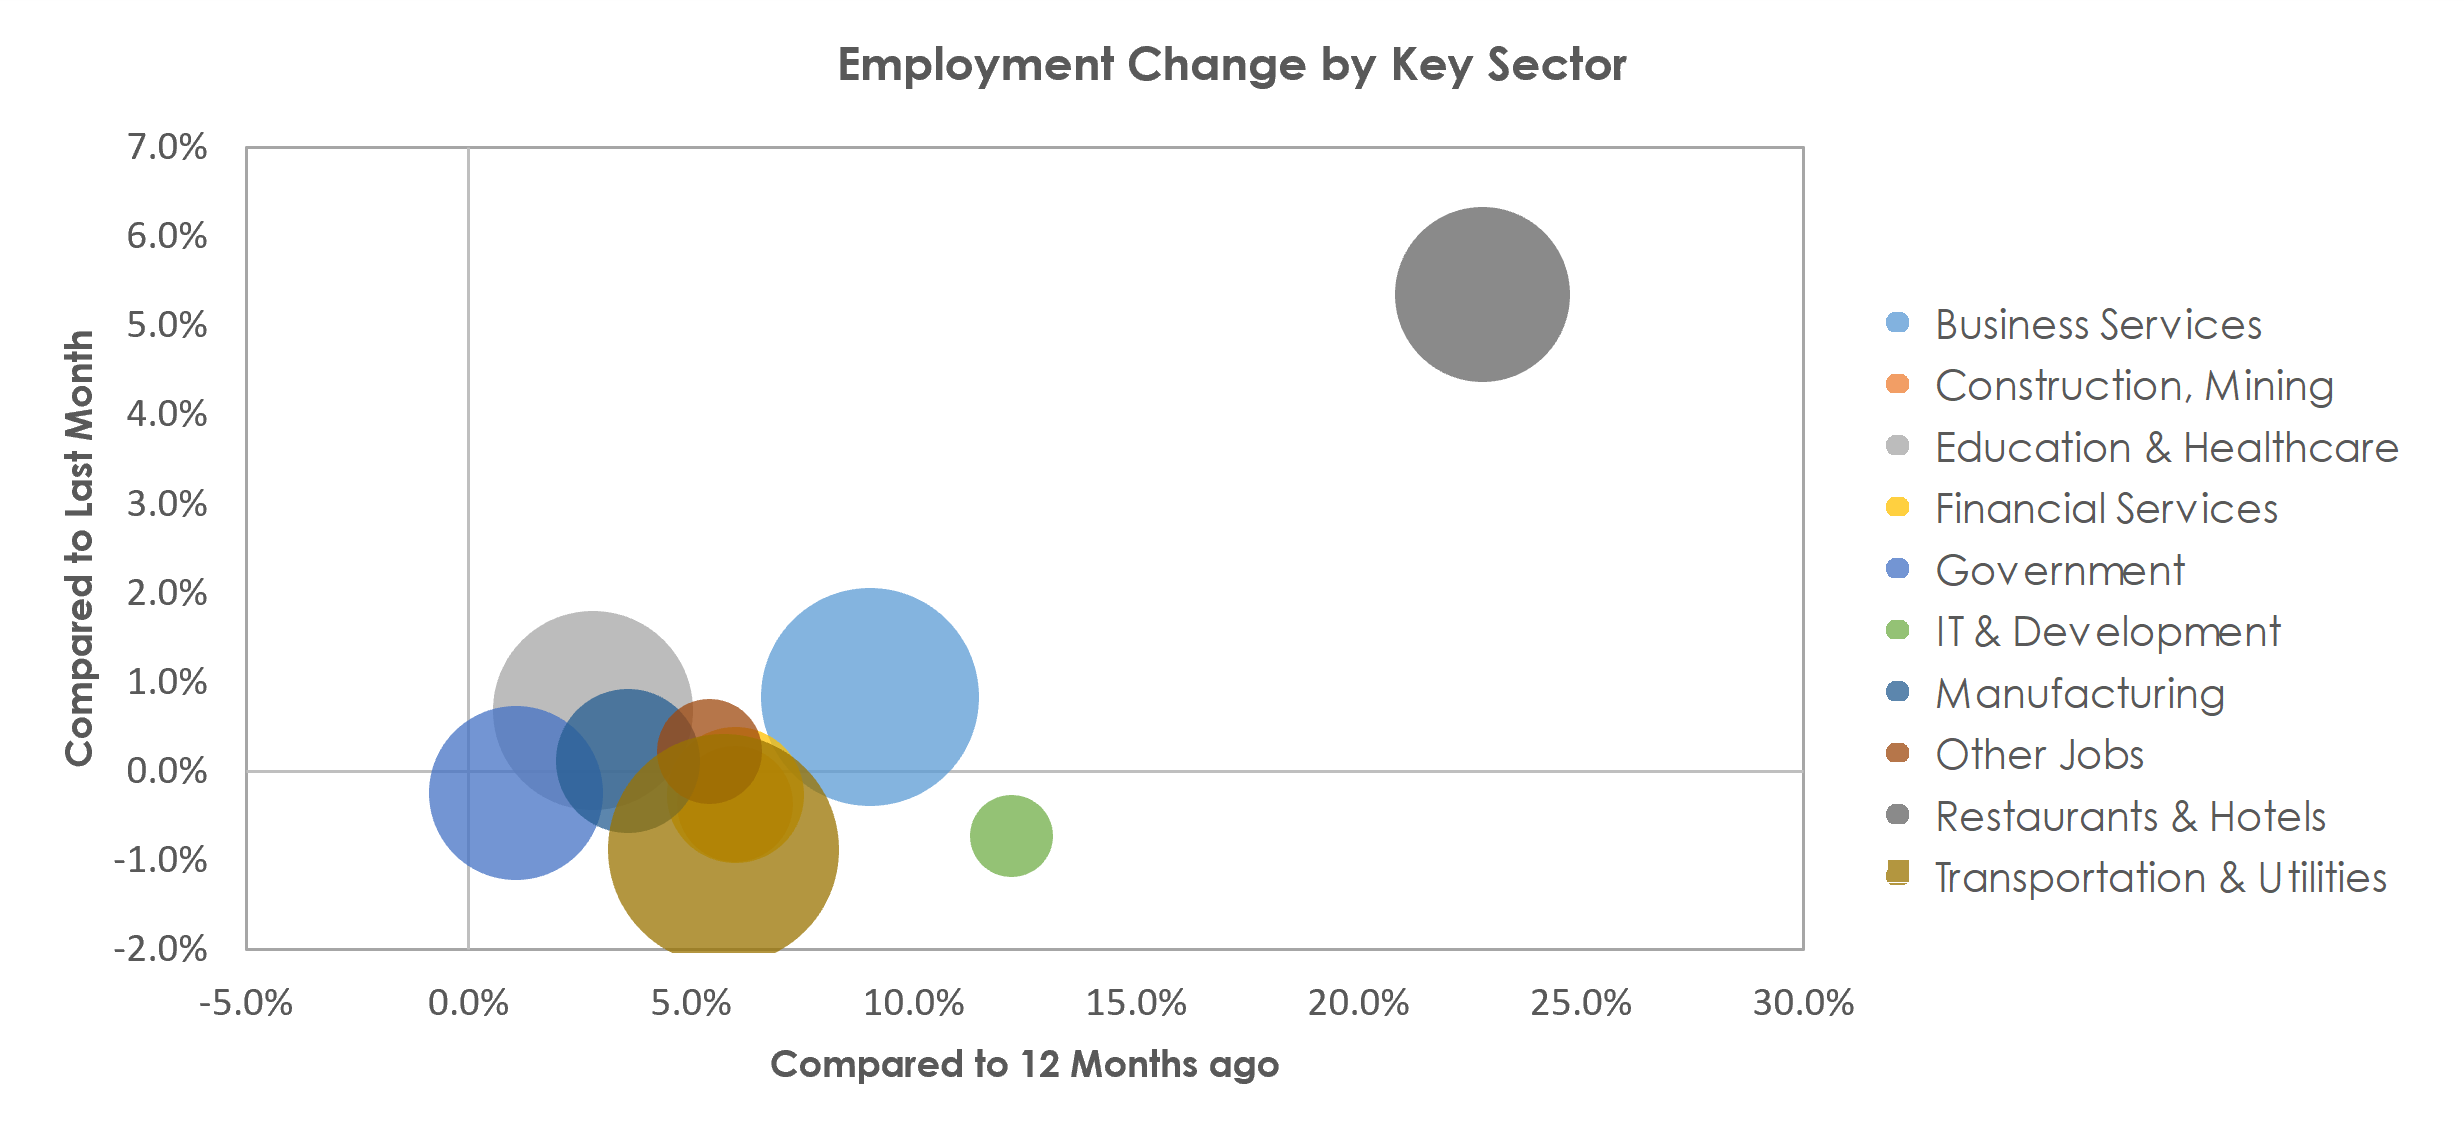 Nashville-Davidson--Murfreesboro--Franklin, TN Unemployment by Industry April 2022